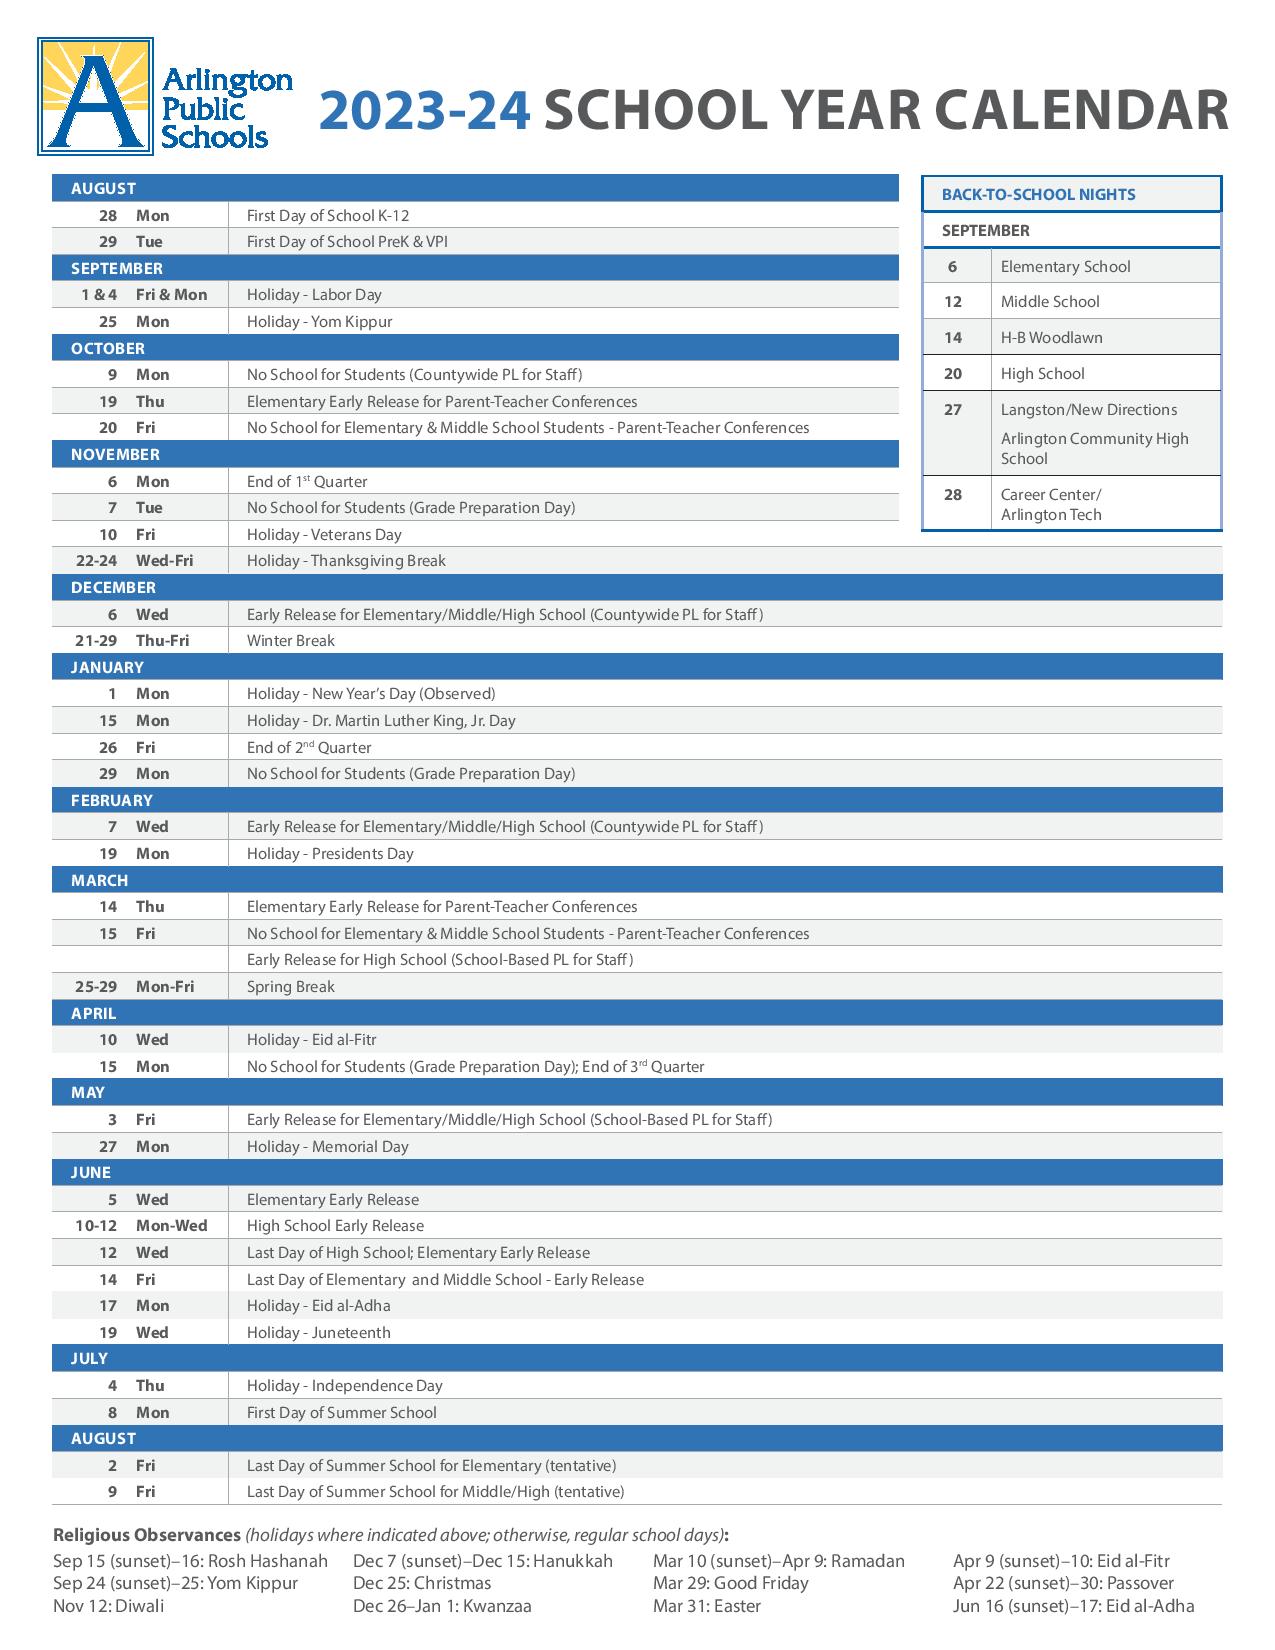 Arlington Public Schools Calendar 20232024 in PDF